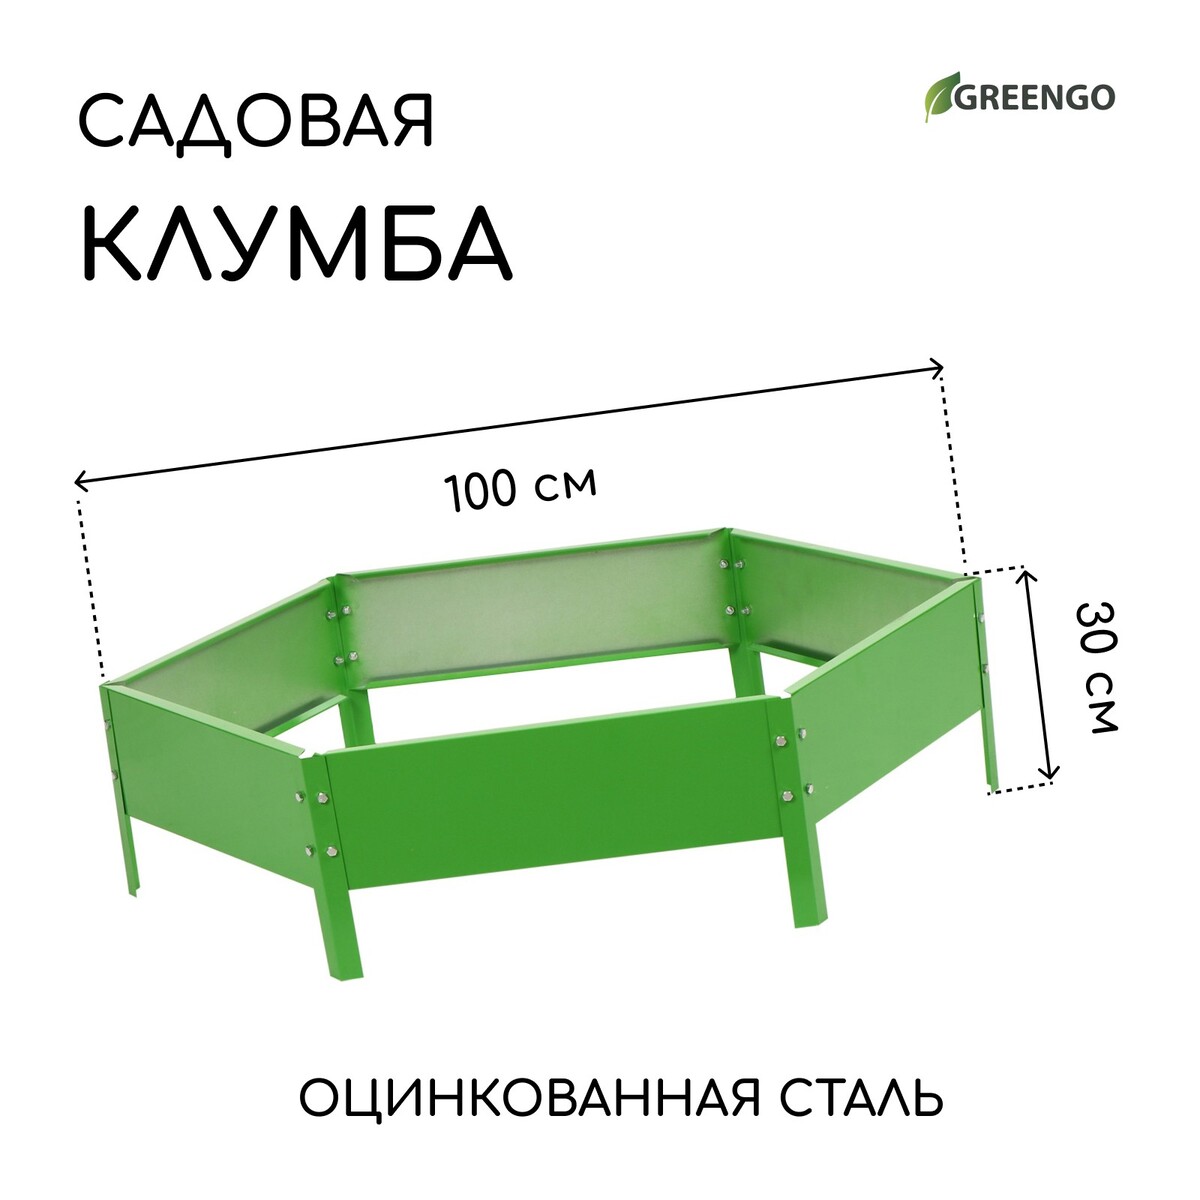 Клумба оцинкованная, d = 100 см, h = 15 см, ярко-зеленая, greengo клумба оцинкованная d 80 см h 15 см ярко зеленая greengo